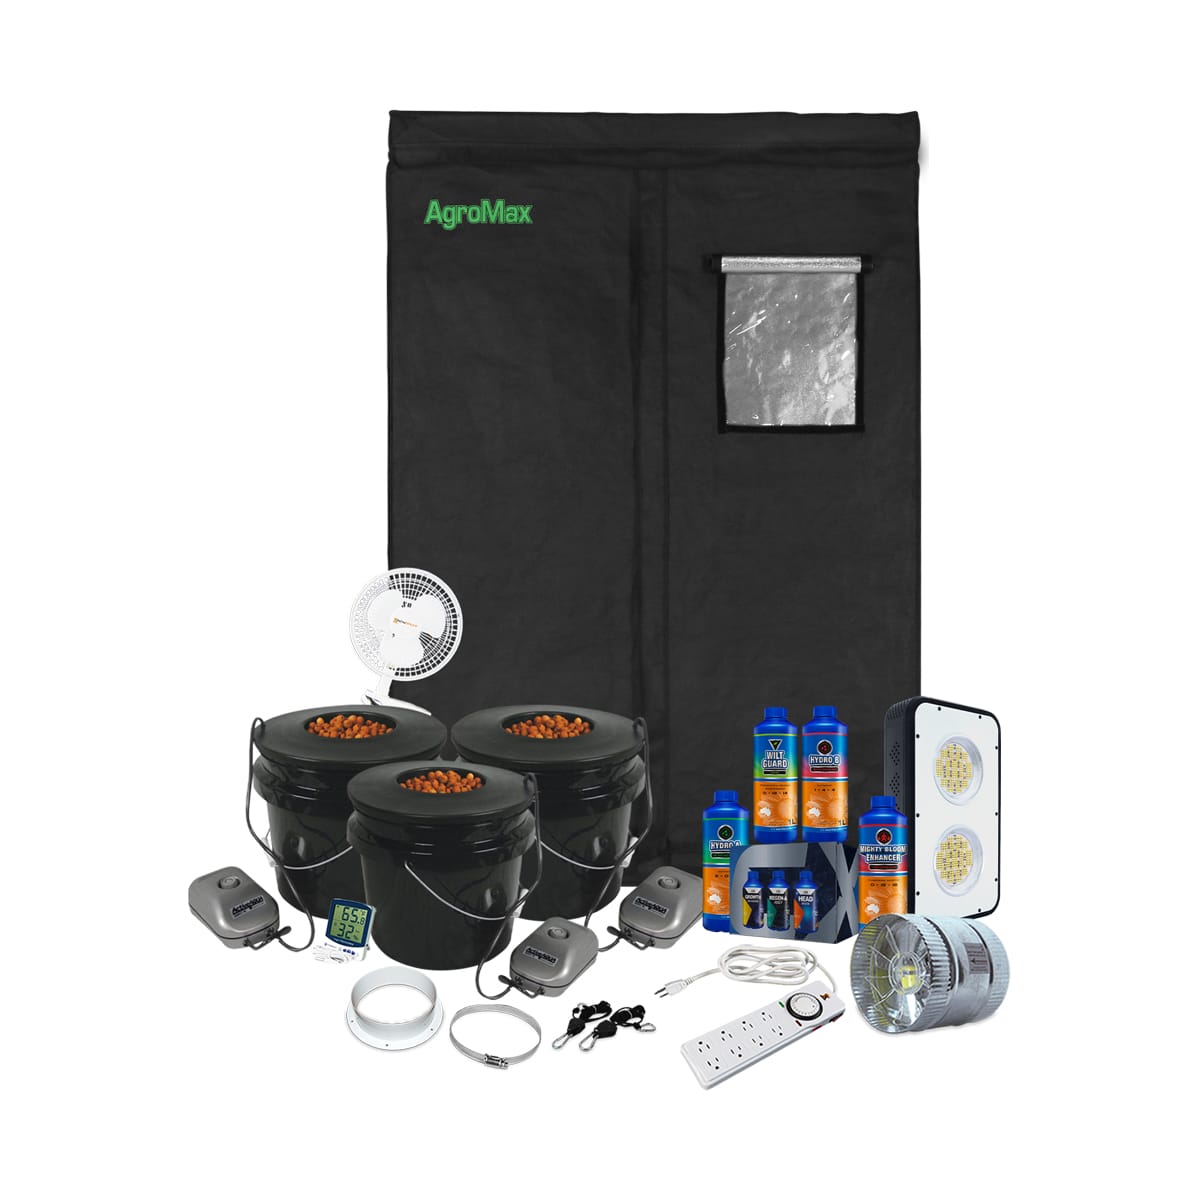 XL Zip Zag Bags - 10 Pack  HTG Supply Hydroponics & Grow Lights